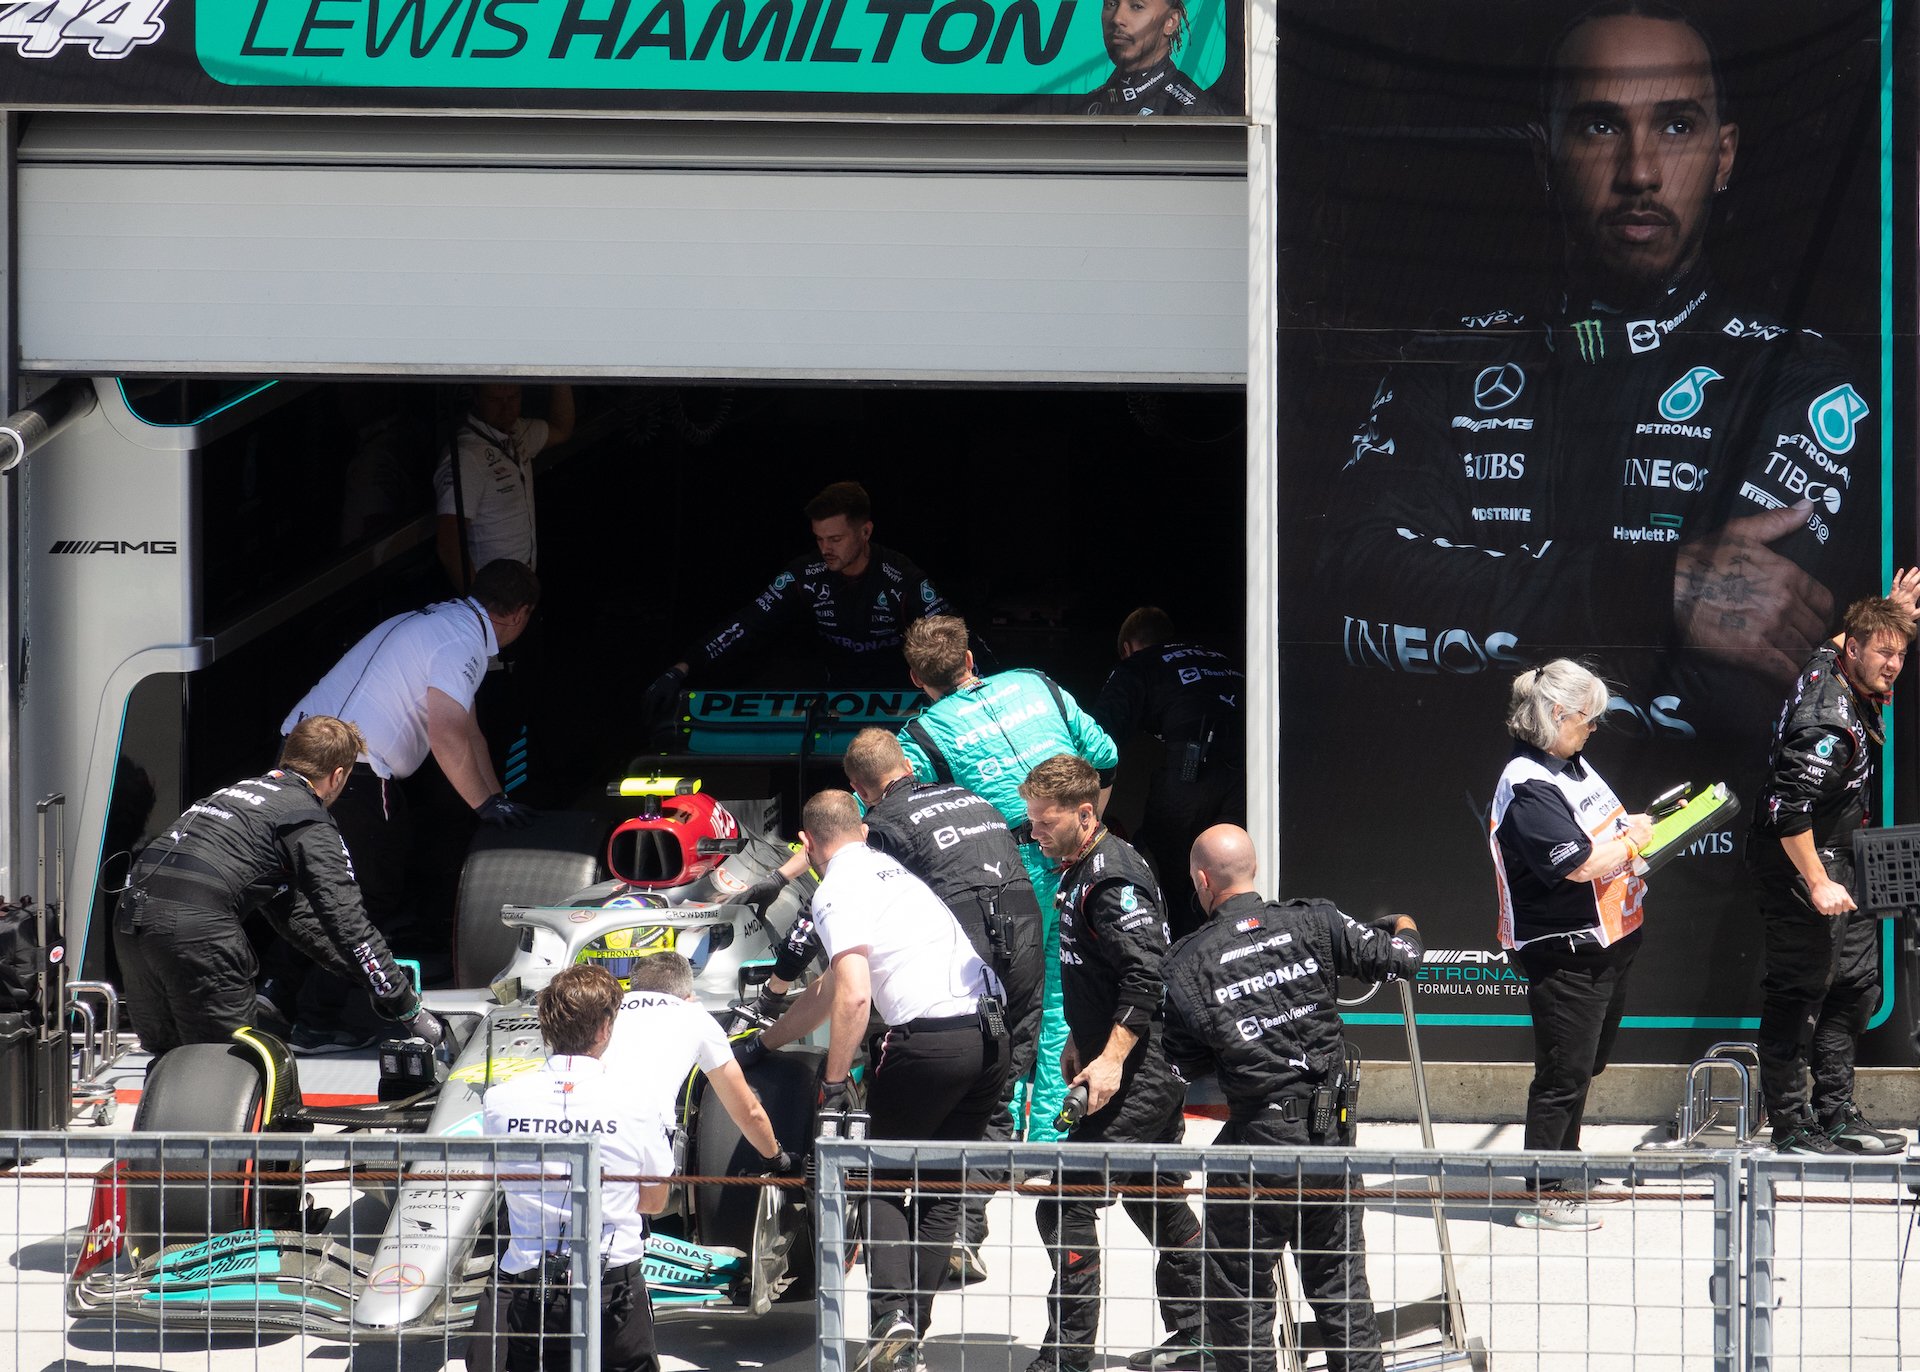 Hamilton to the grid!